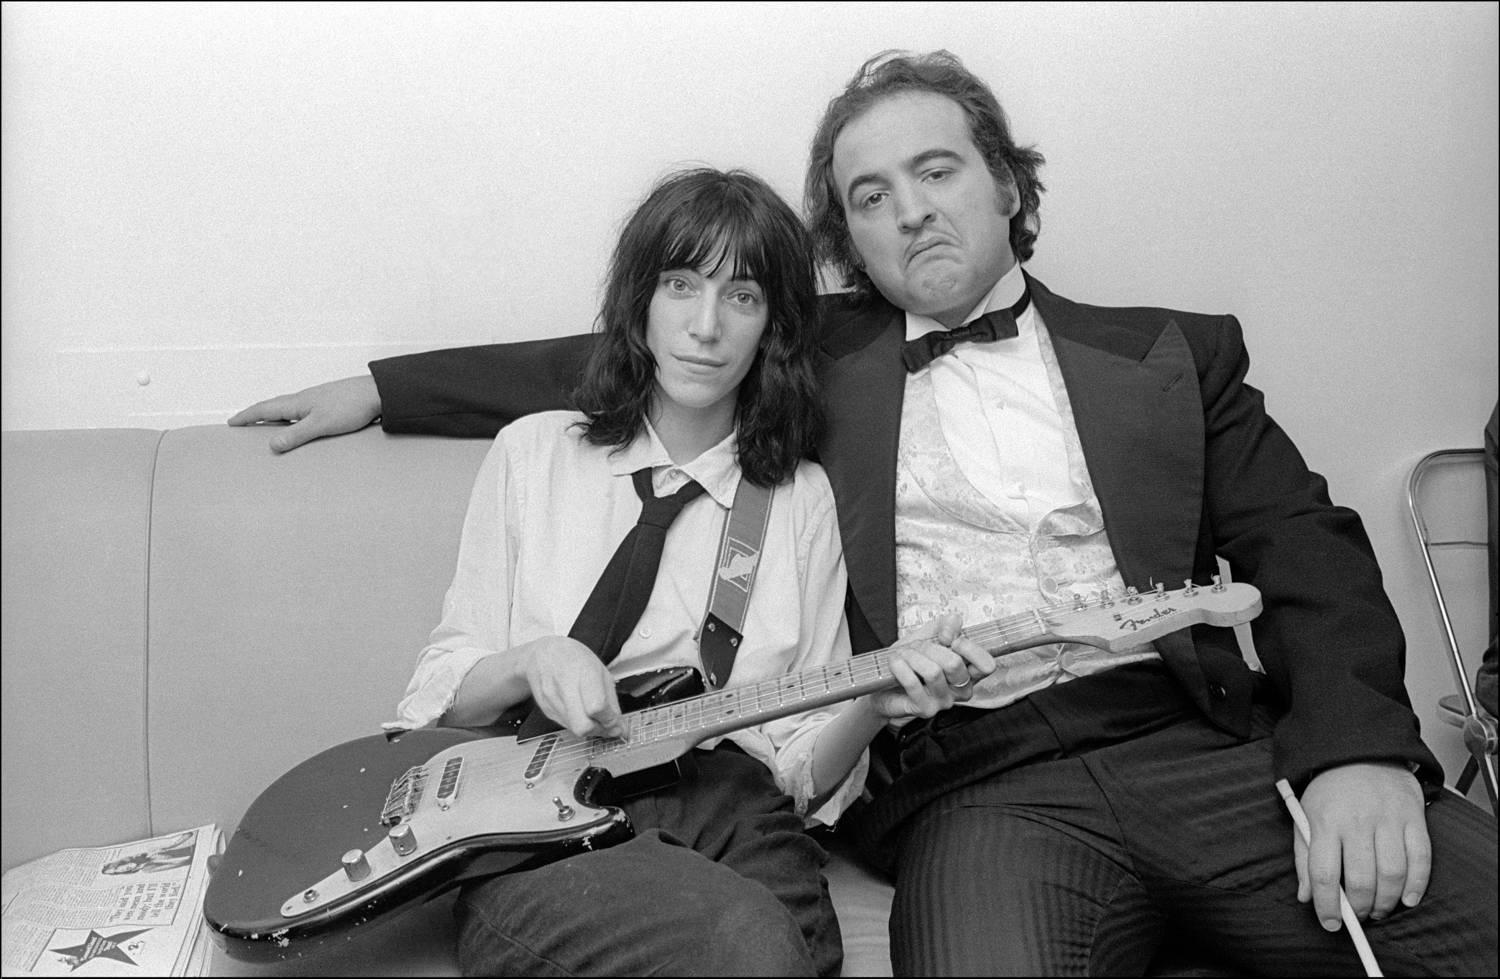 Allan Tannenbaum Black and White Photograph - Patti Smith and John Belushi backstage at Saturday Night Live, 1976